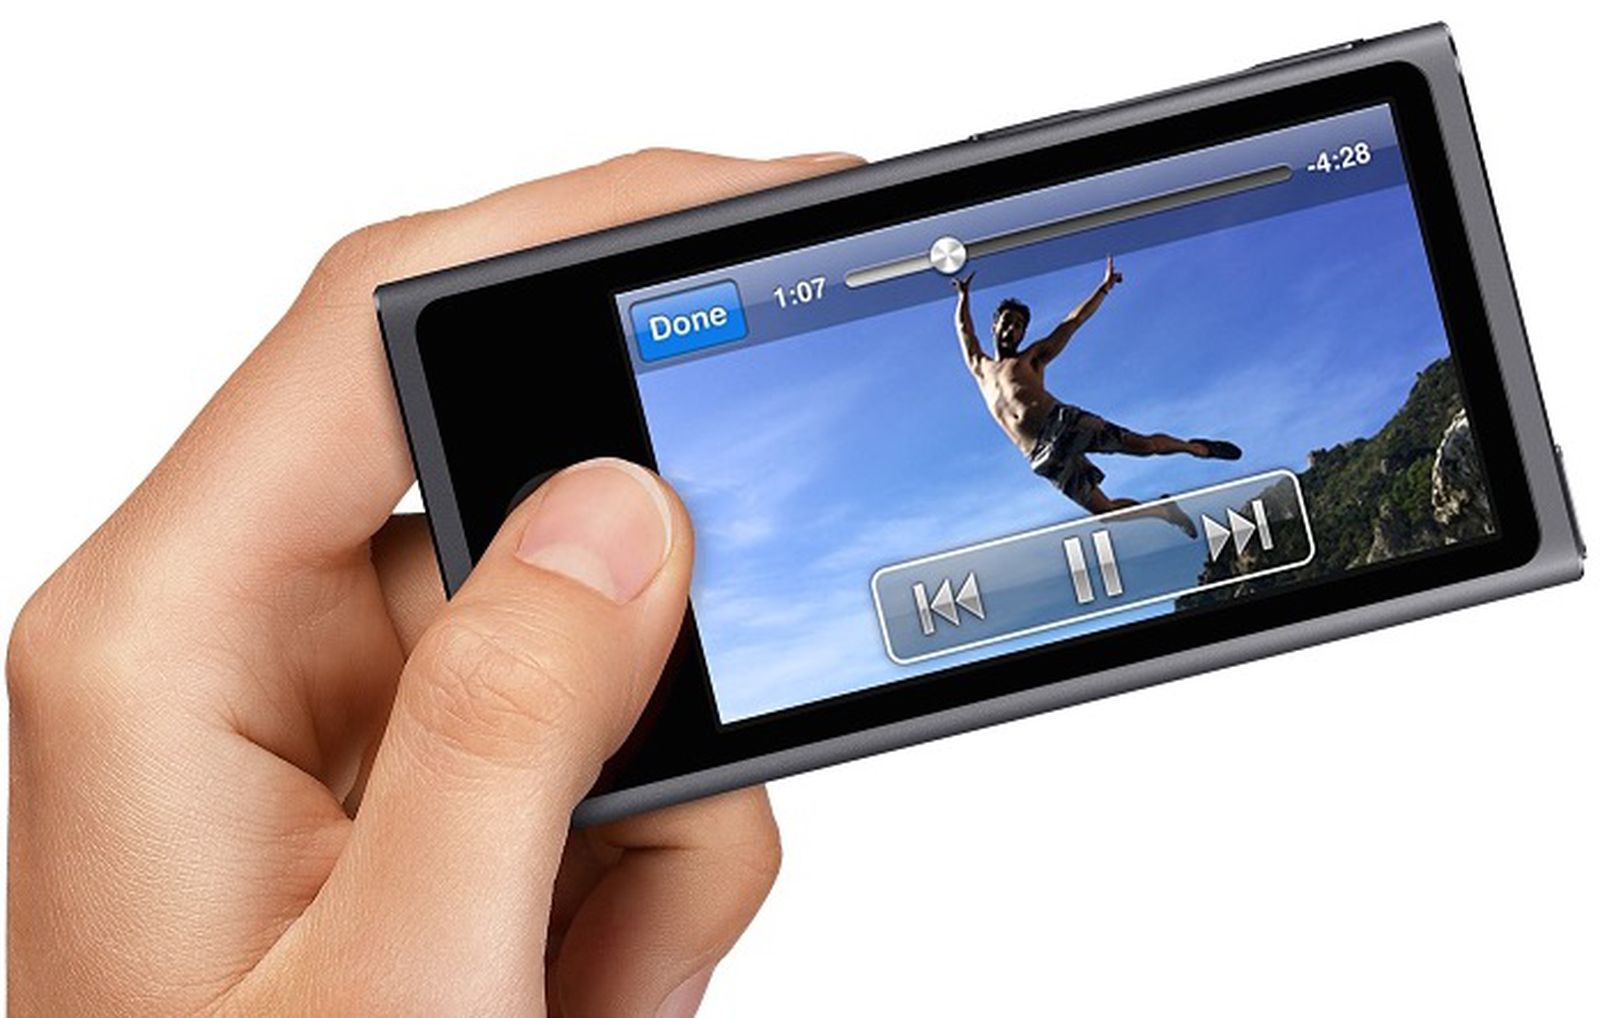 iPod nano: Mid-Range iPod, Now Discontinued